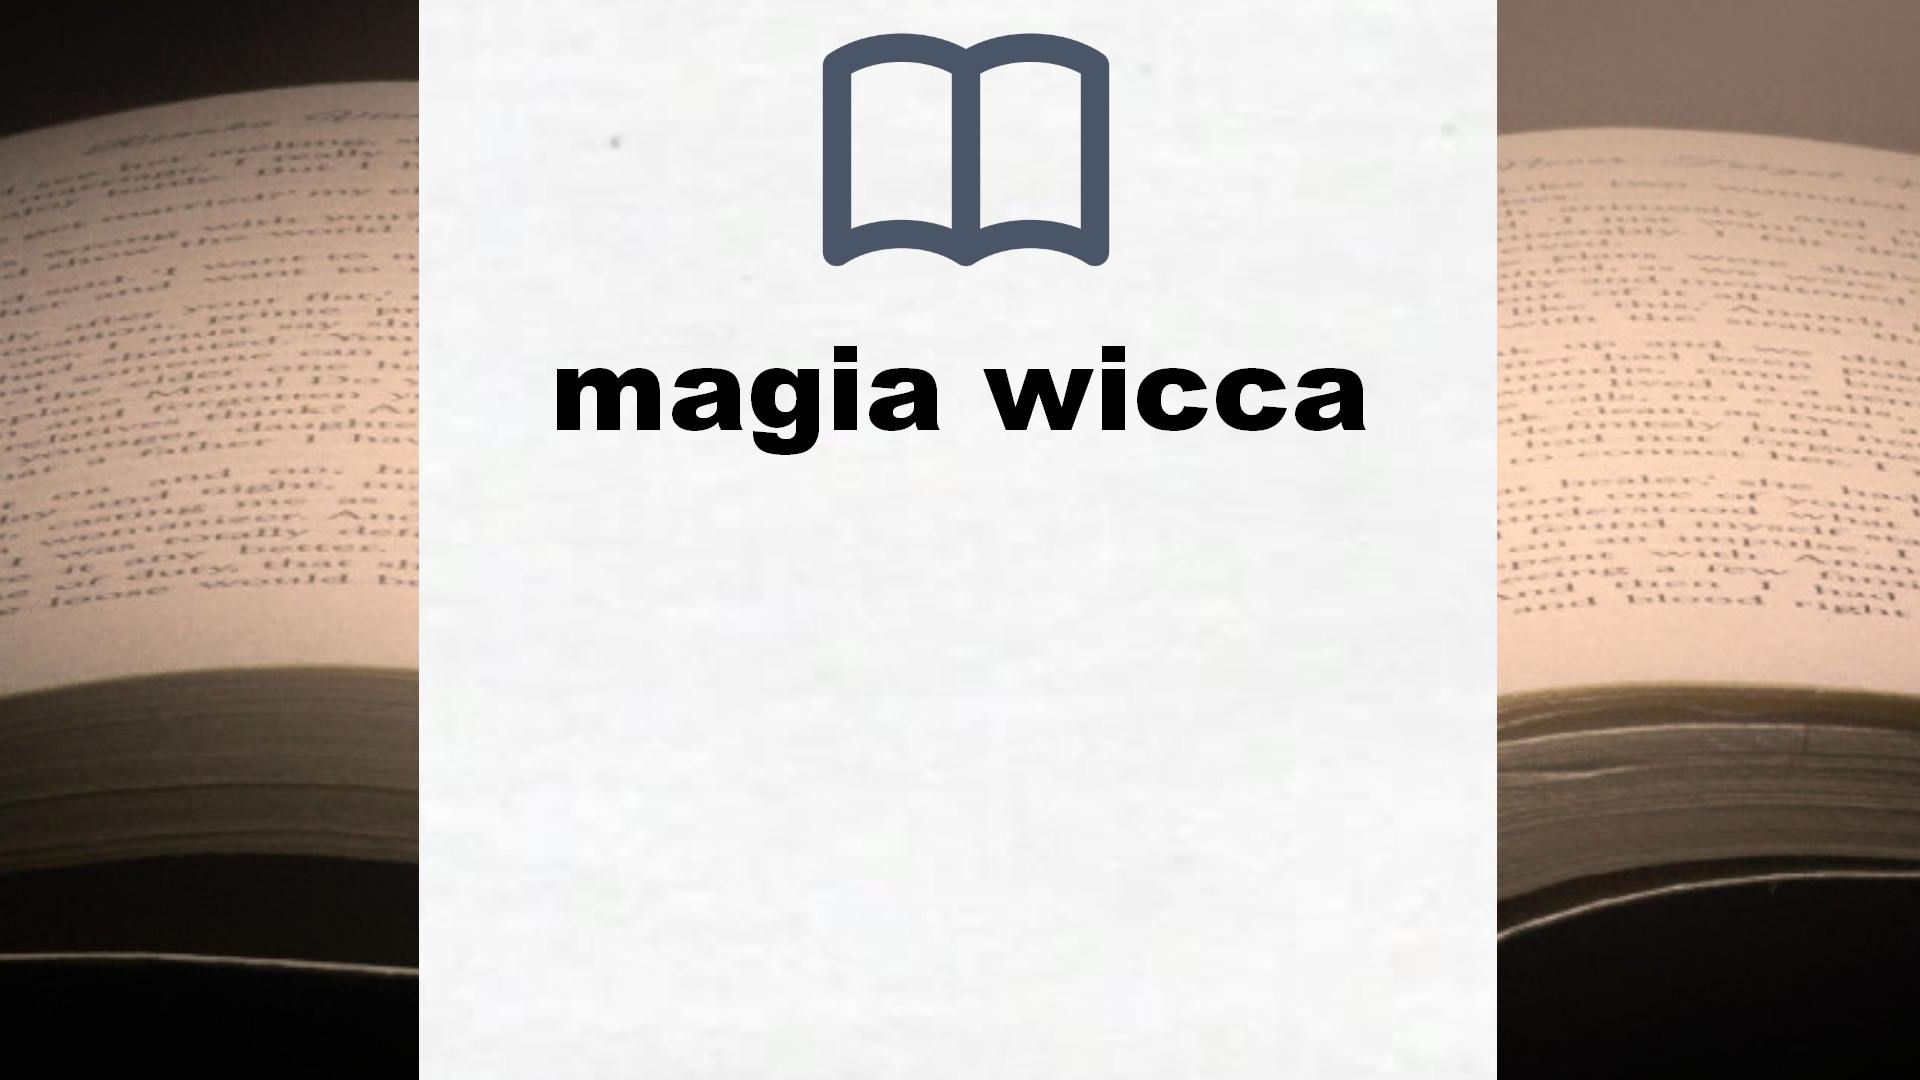 Libros sobre magia wicca